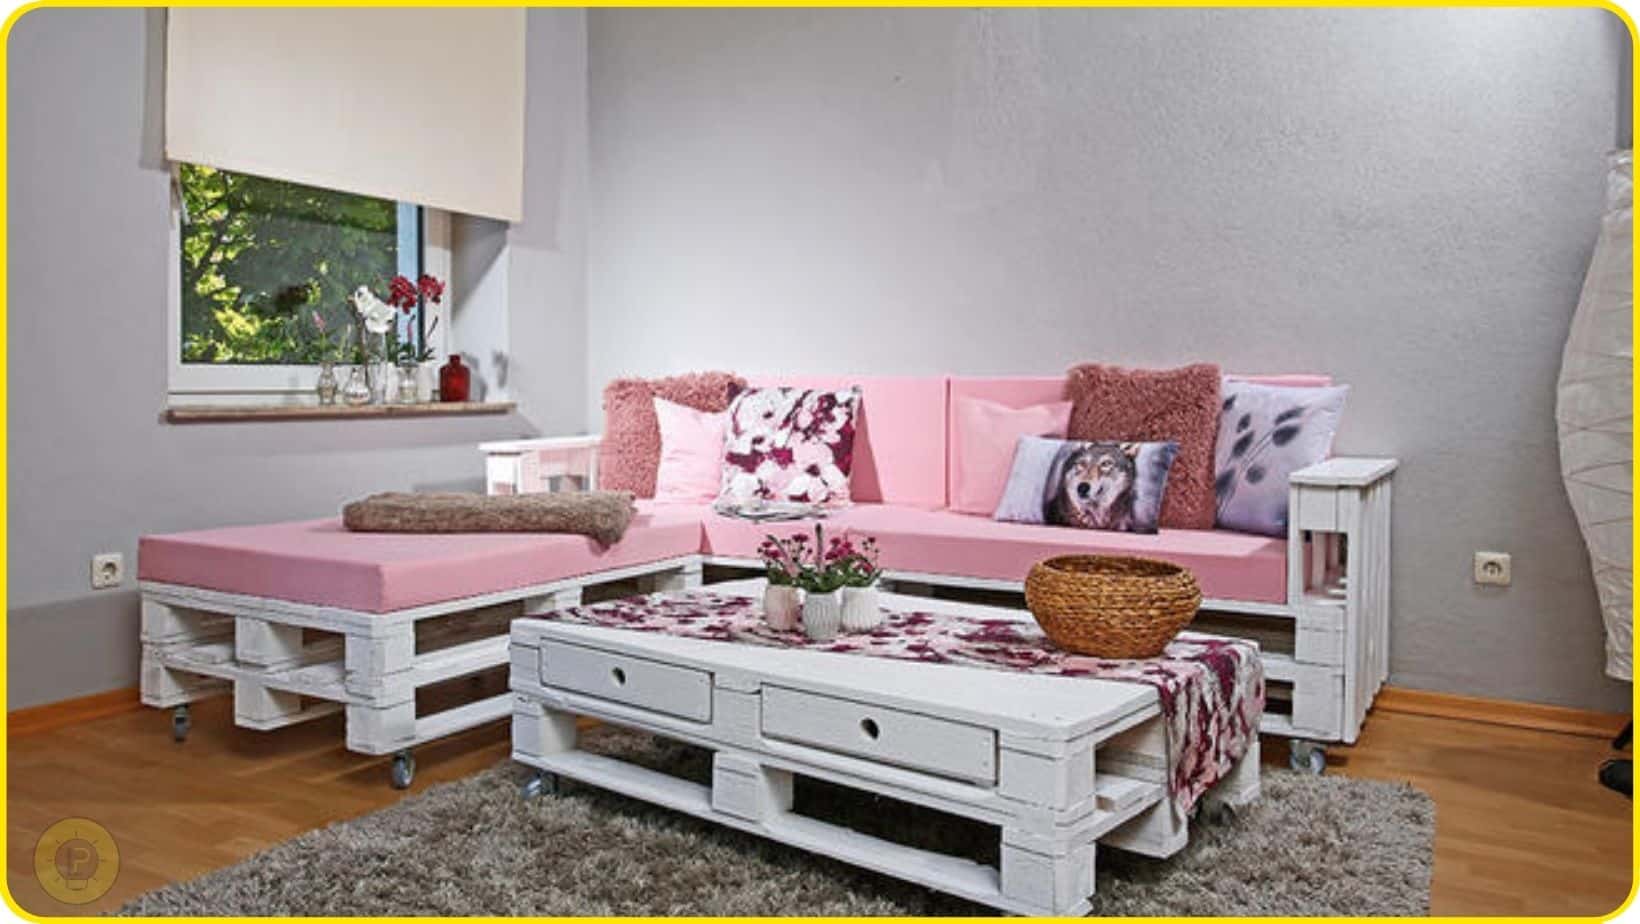 The Pallet Furniture Design ideas